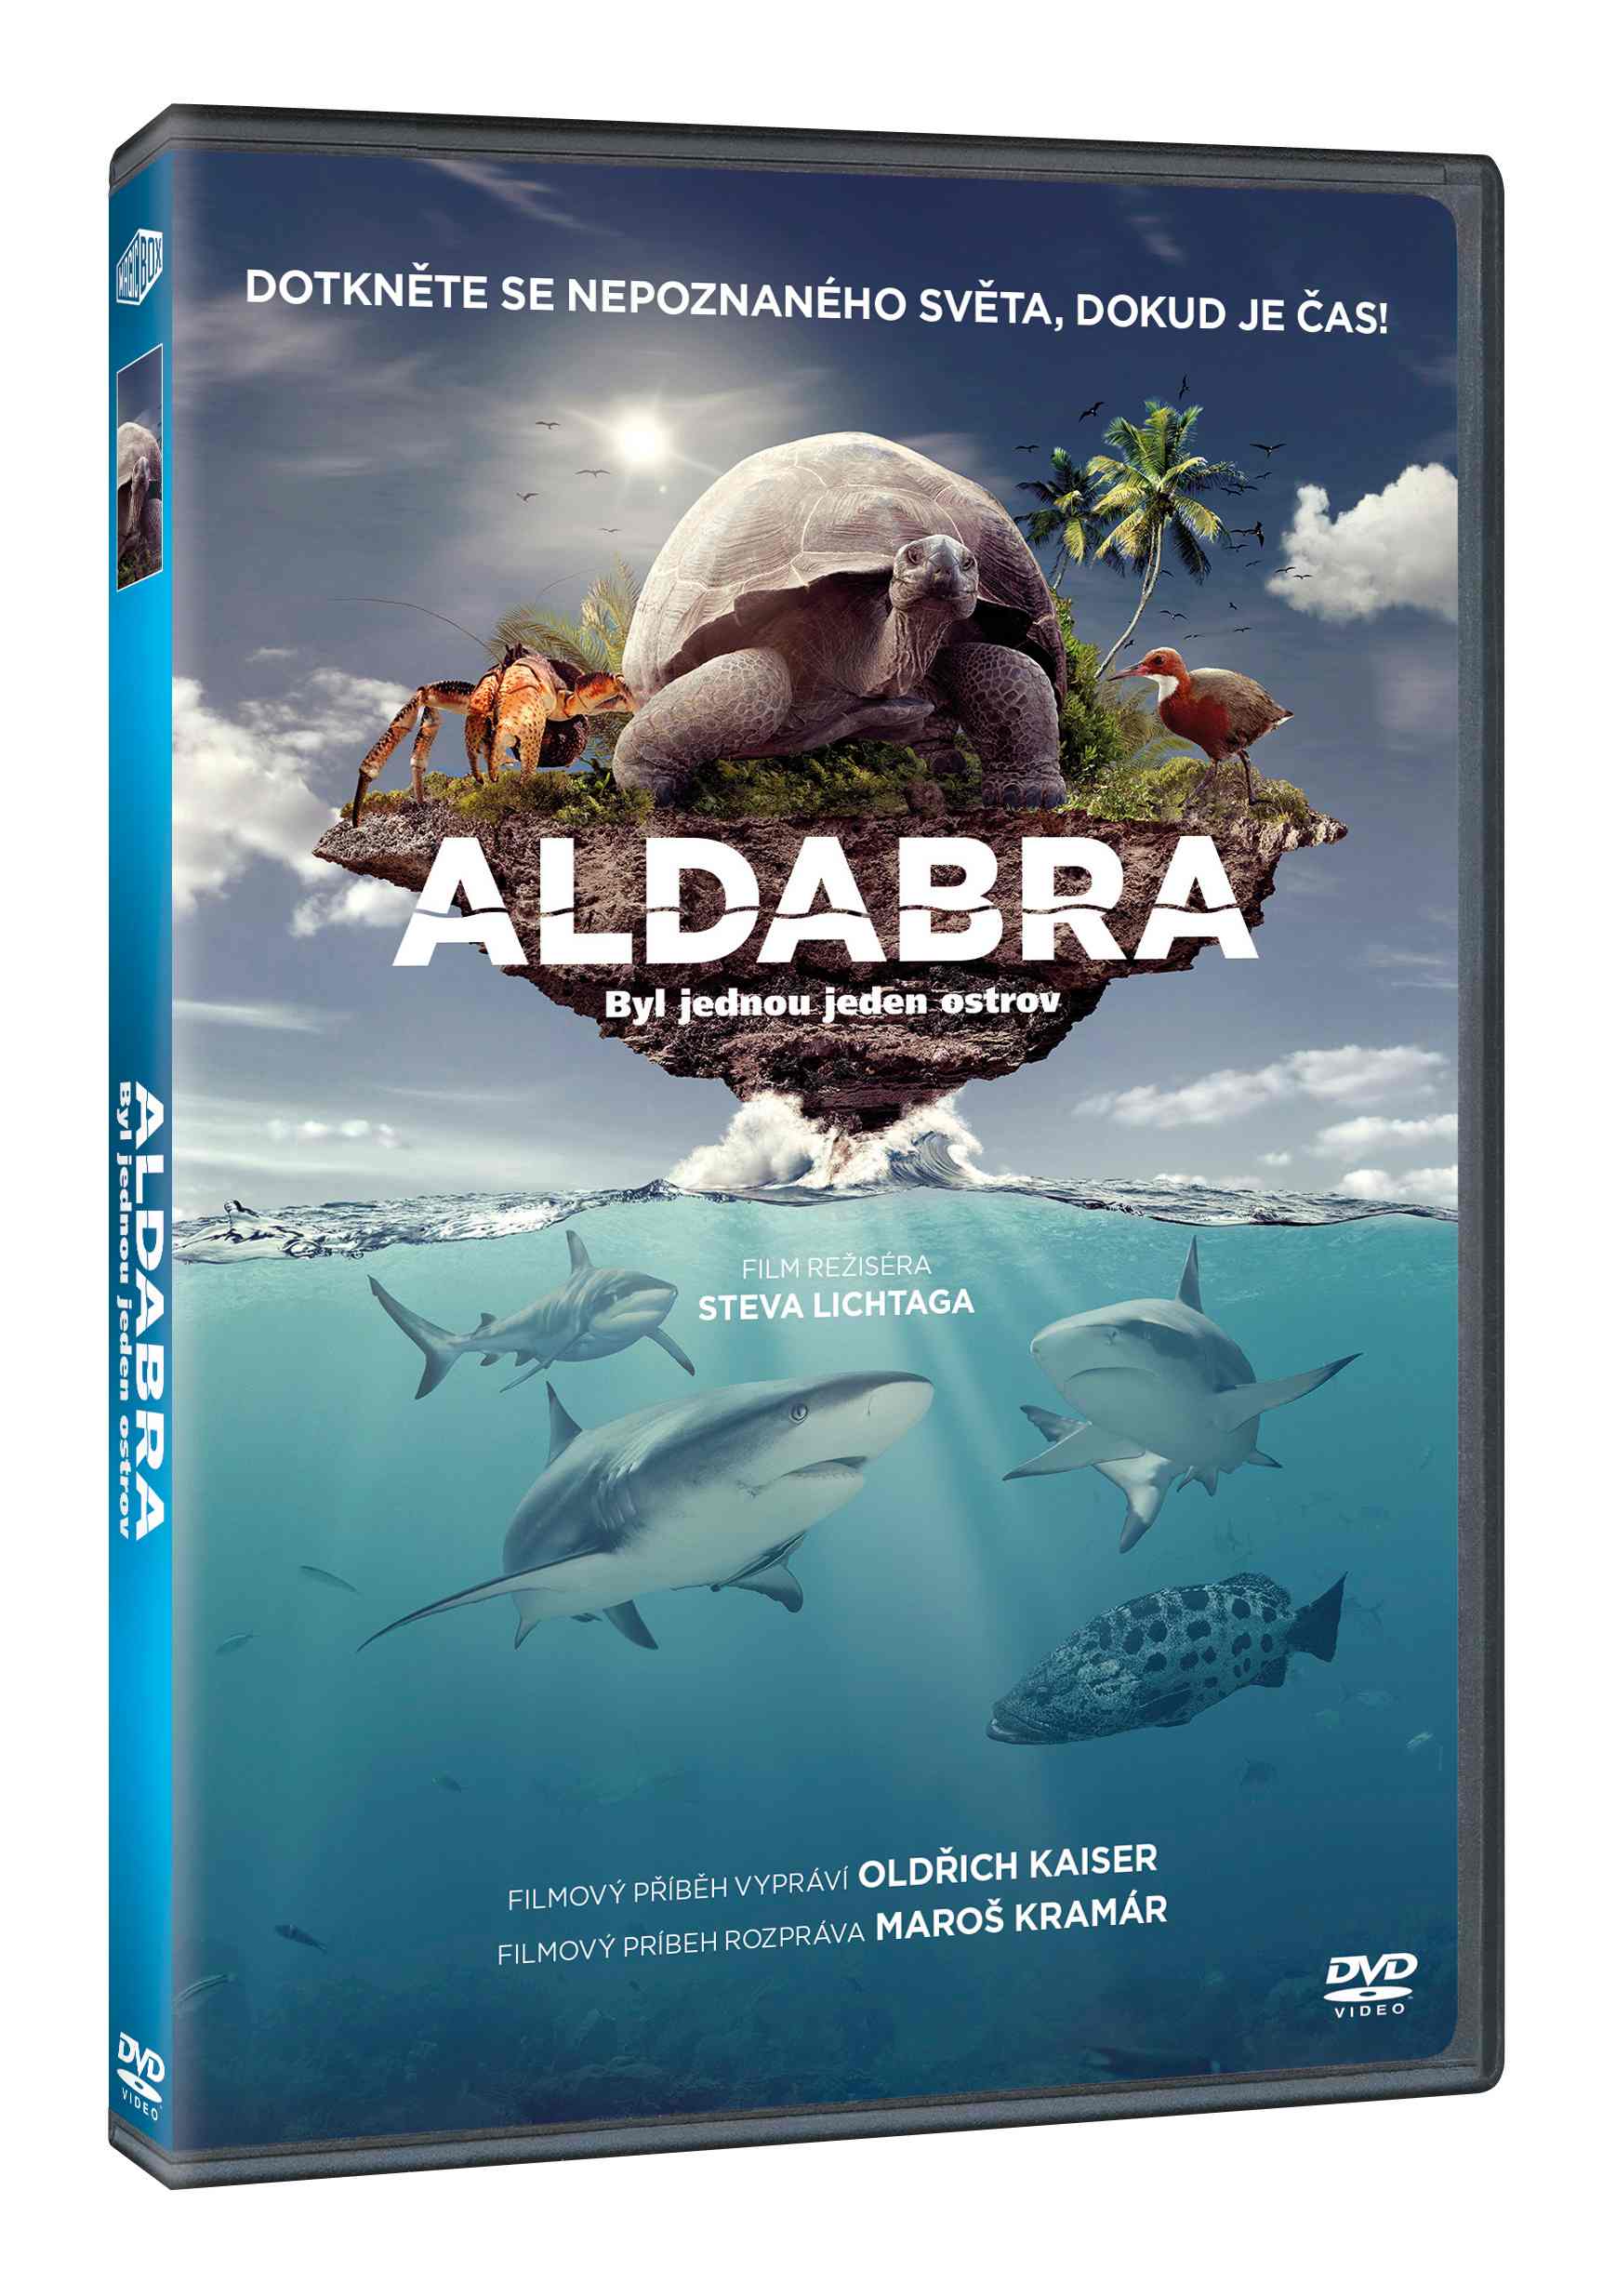 Aldabra: byl jednou jeden ostrov - DVD